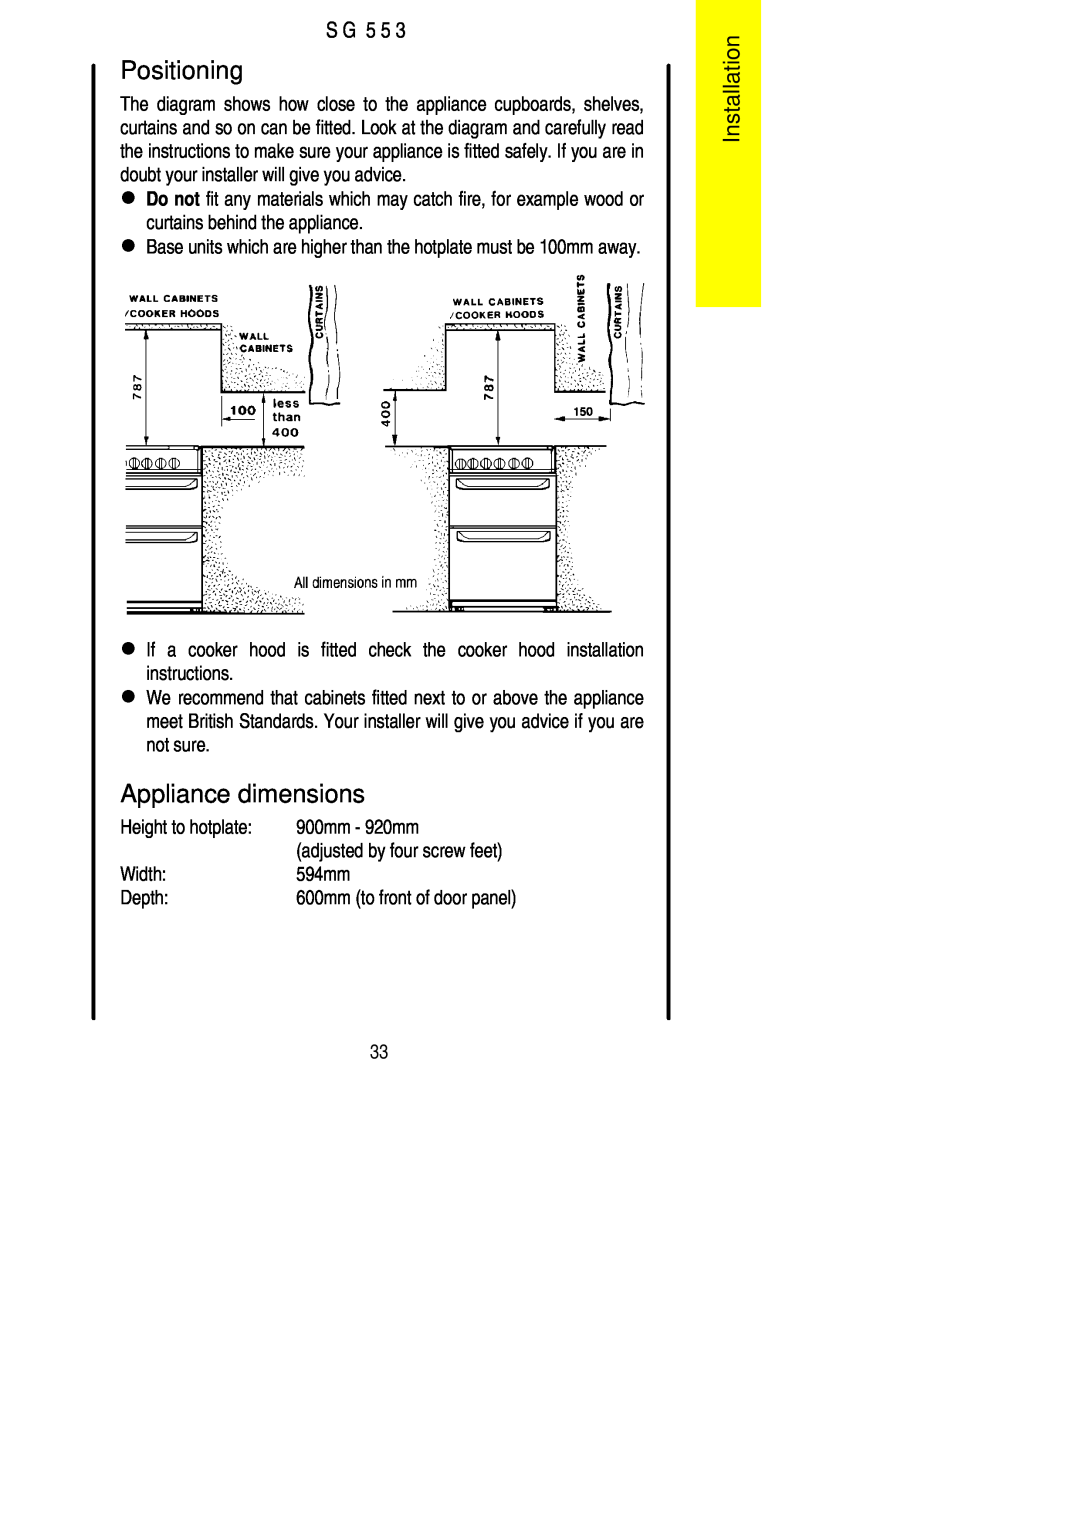 Parkinson Cowan SG 553 installation instructions Positioning, Appliance dimensions, Installation, S G 